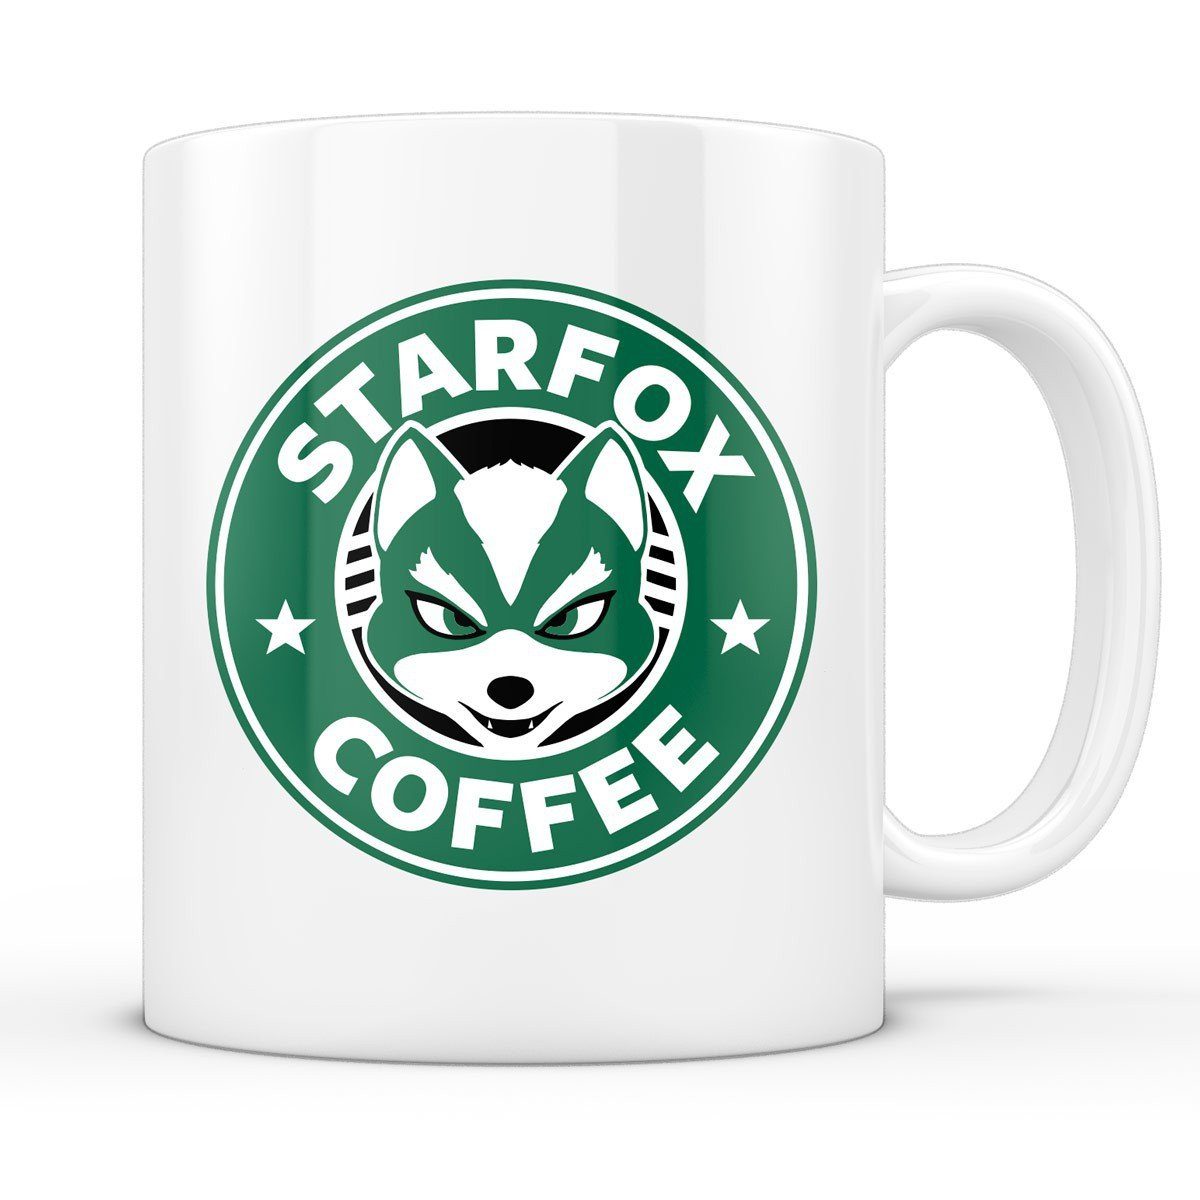 style3 Tasse, Keramik, Starfox Coffee Kaffeebecher Tasse corneria adventure videospieler kaffee cafe barista snes